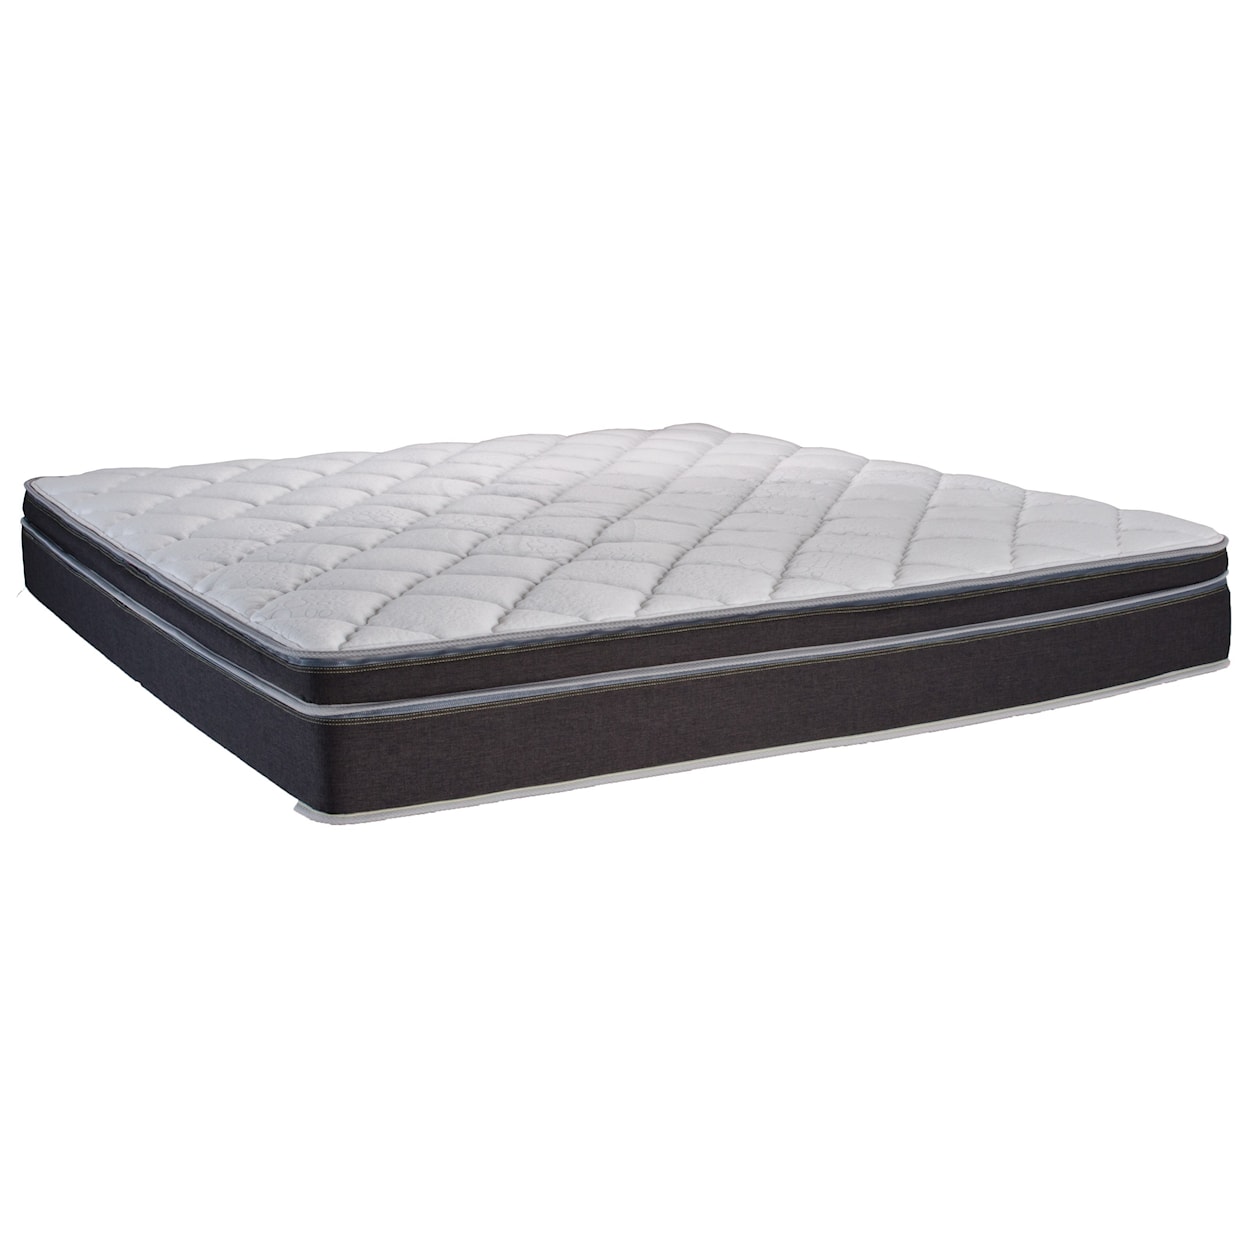 Instant Comfort Q5 InstantComfort Full Q5 Pillow Top Mattress